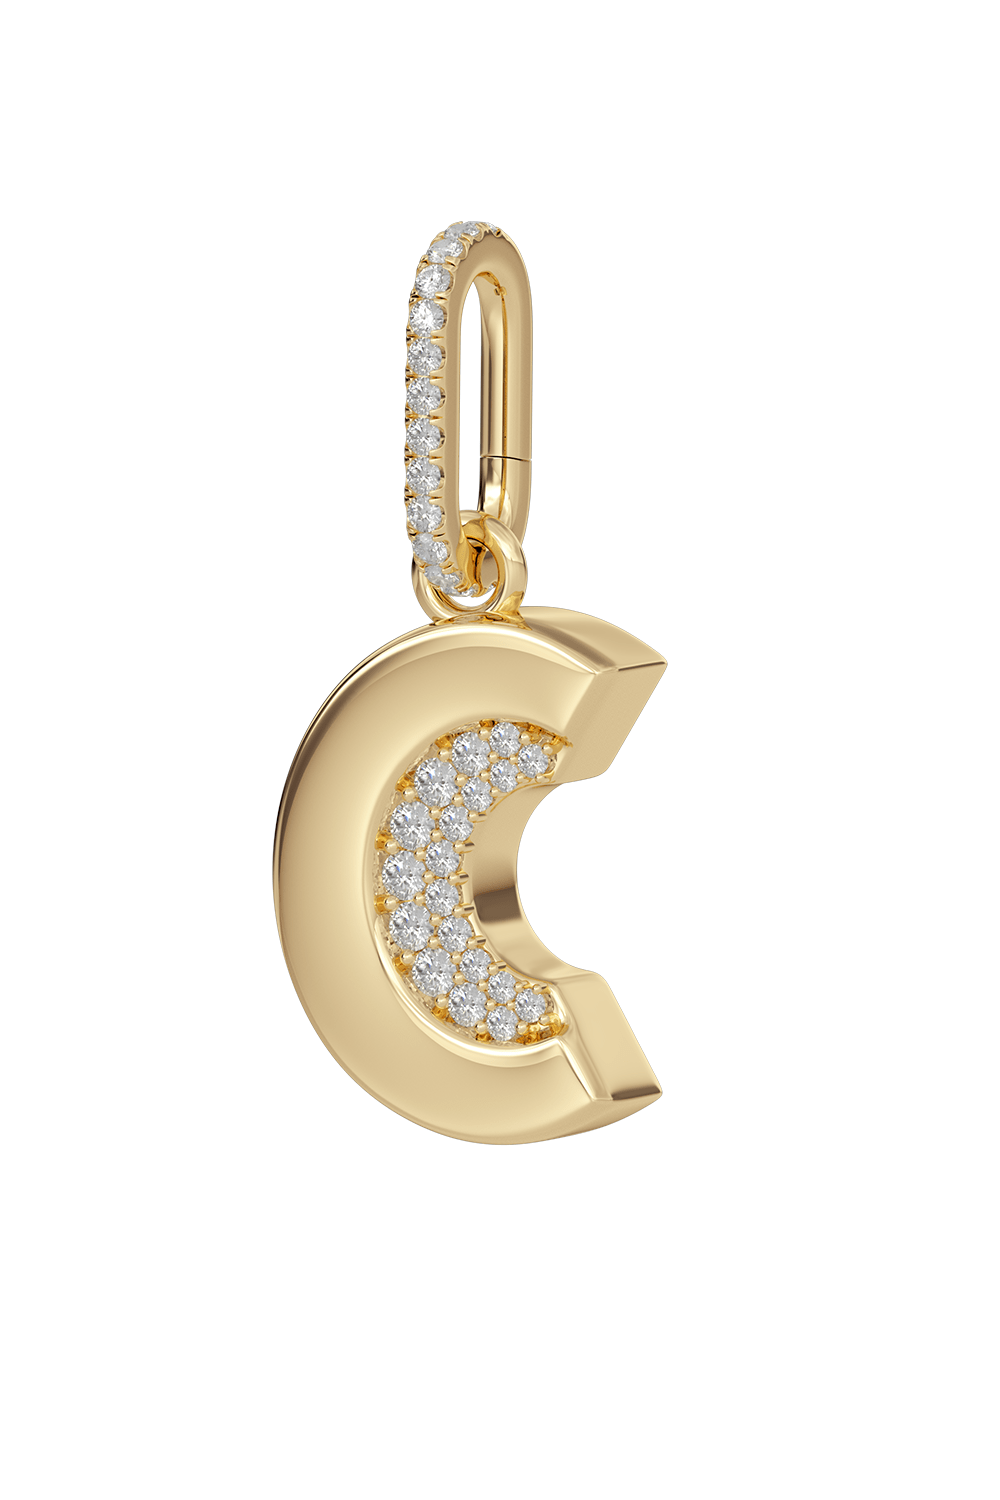 Amina Sorel Fine Jewelry-BLOCK LETTER ABC CHARM PENDANT-YELLOW GOLD